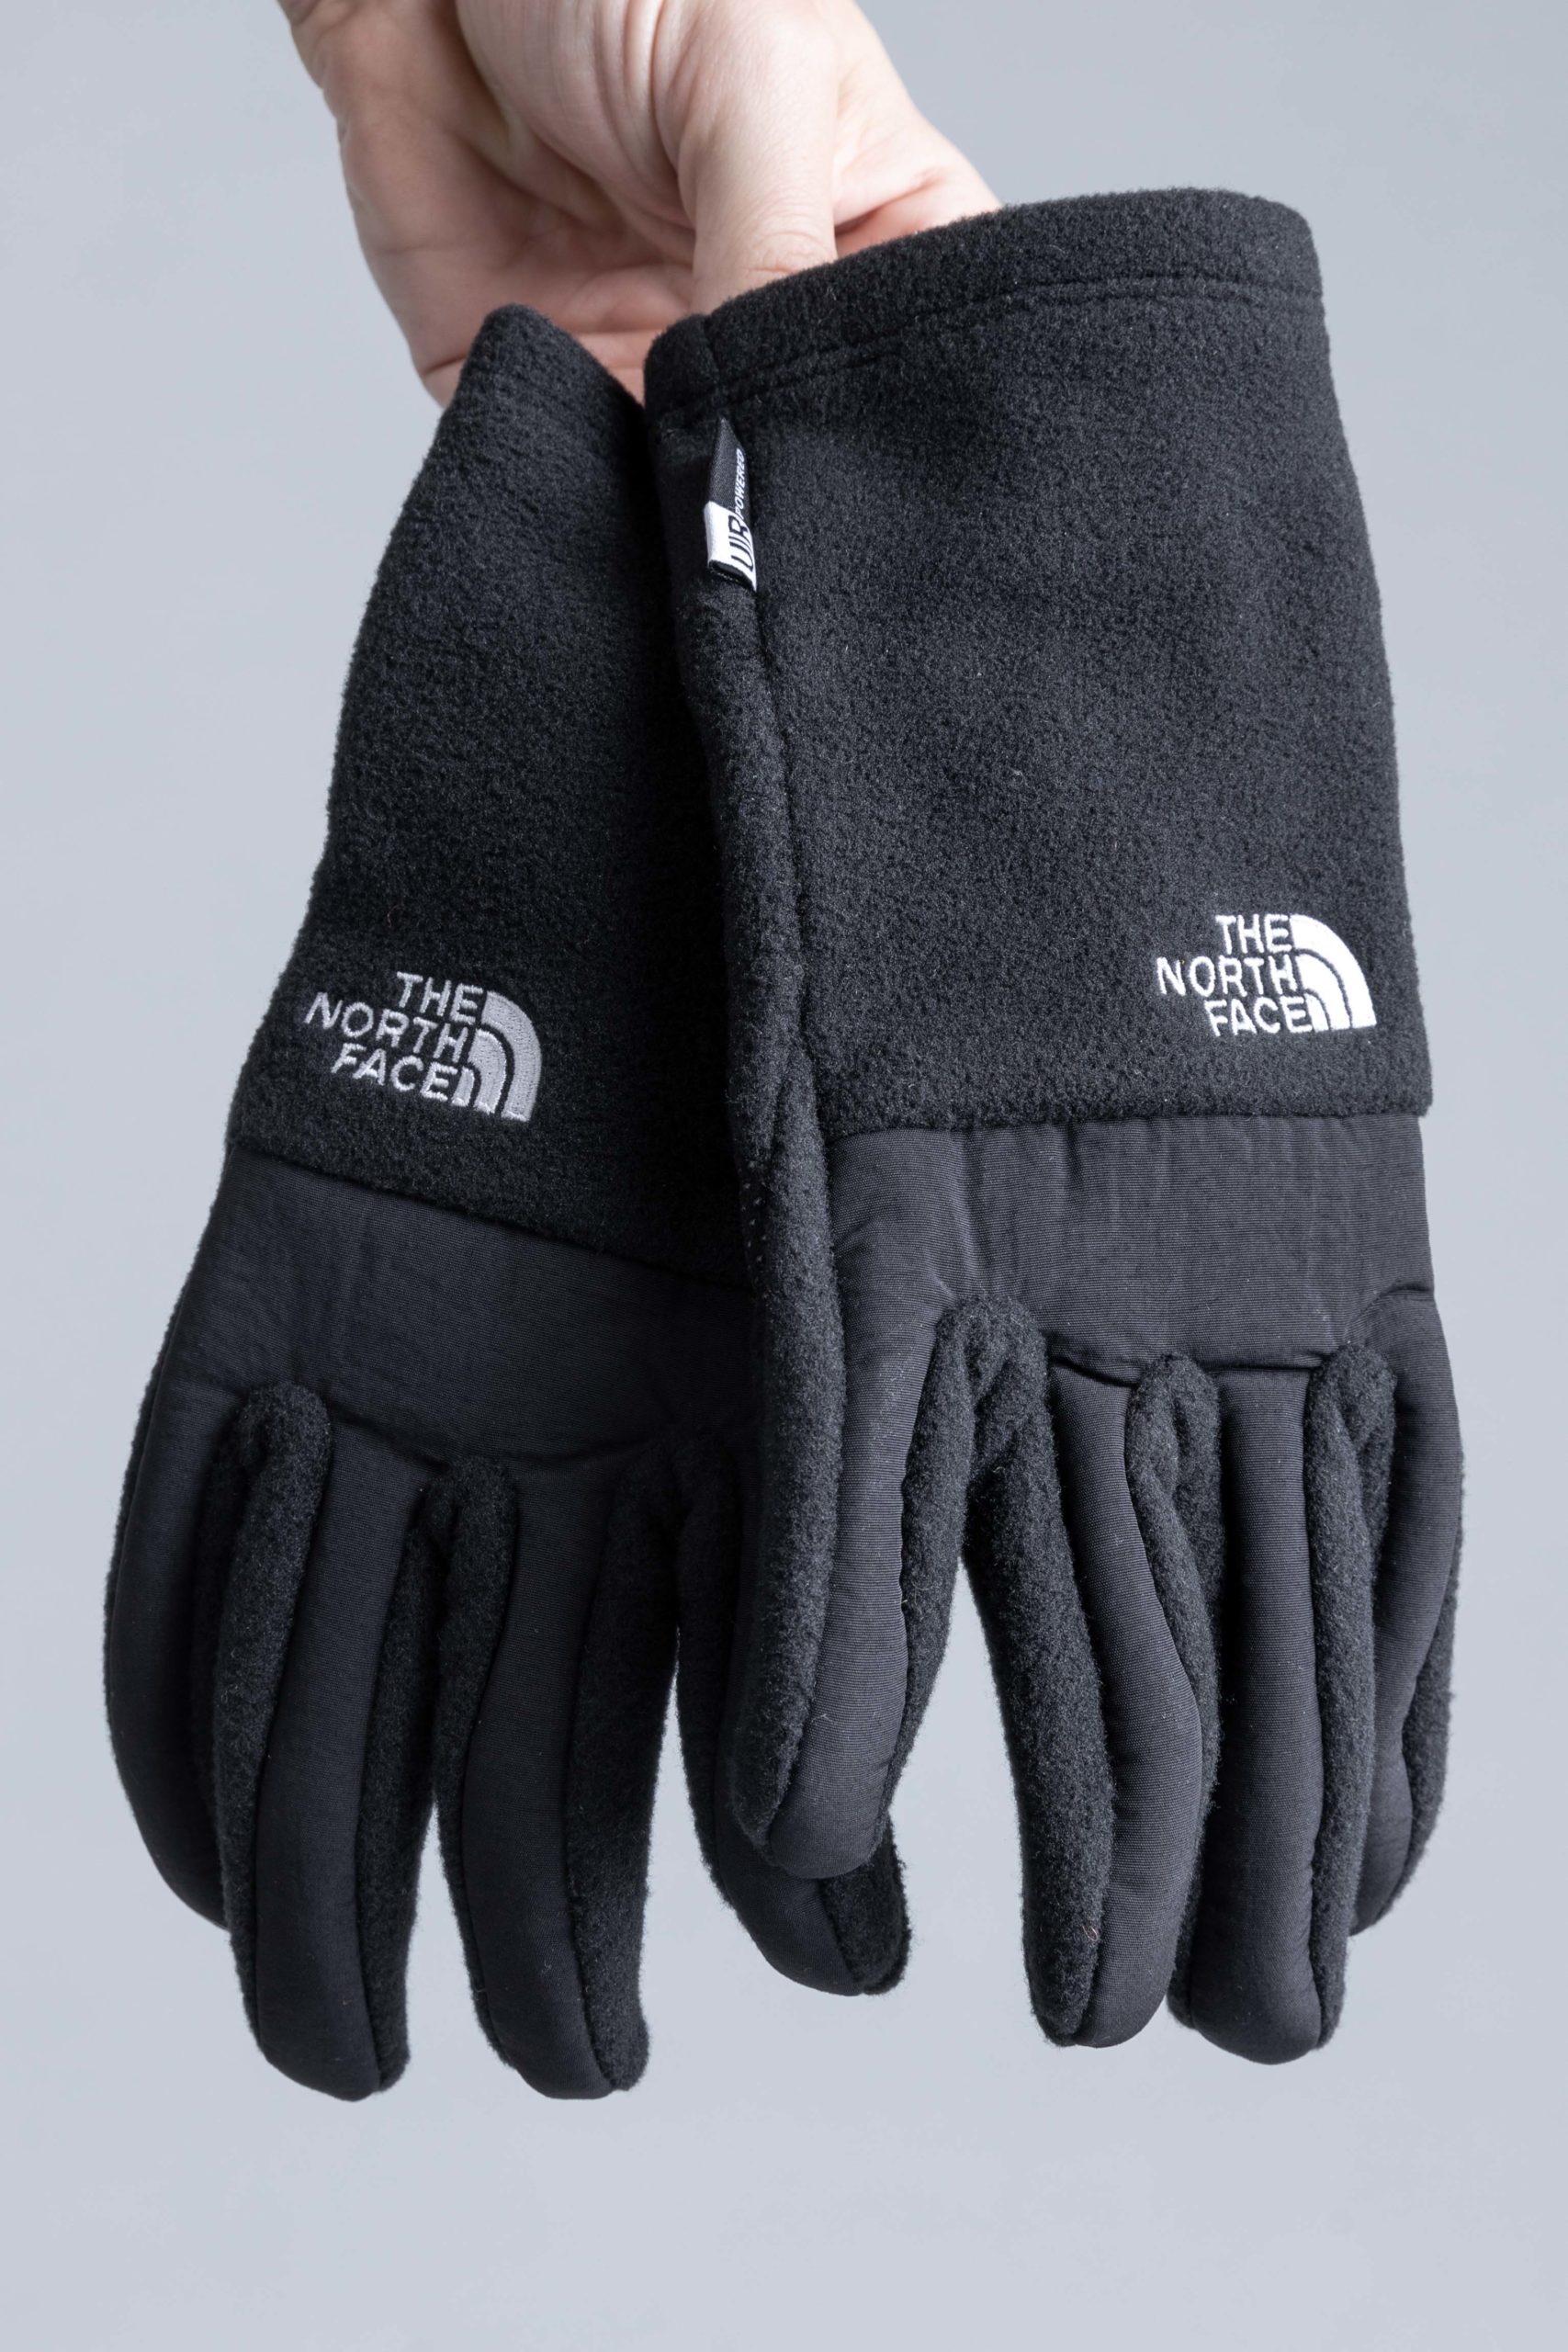 denali gloves north face